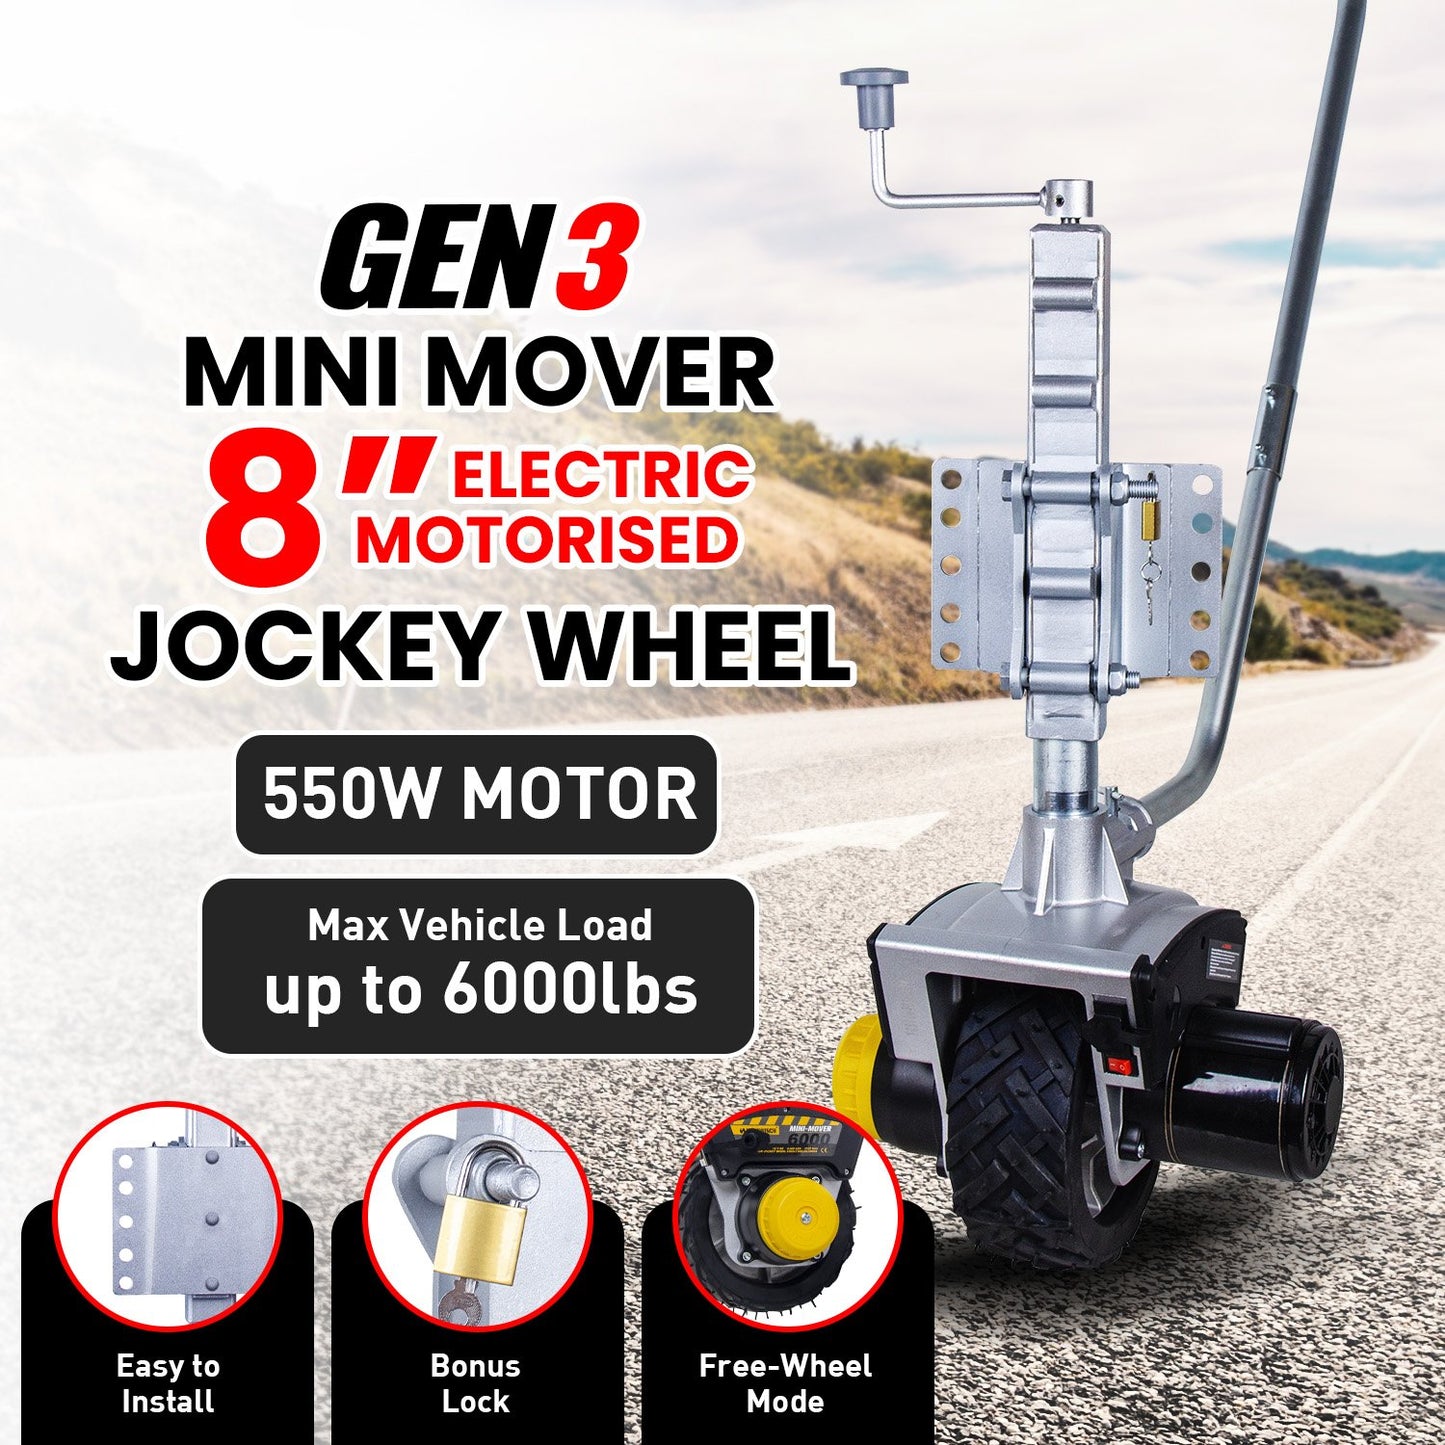 Gen3 Mini Mover 12V 550W Electric Motorised Jockey Wheel